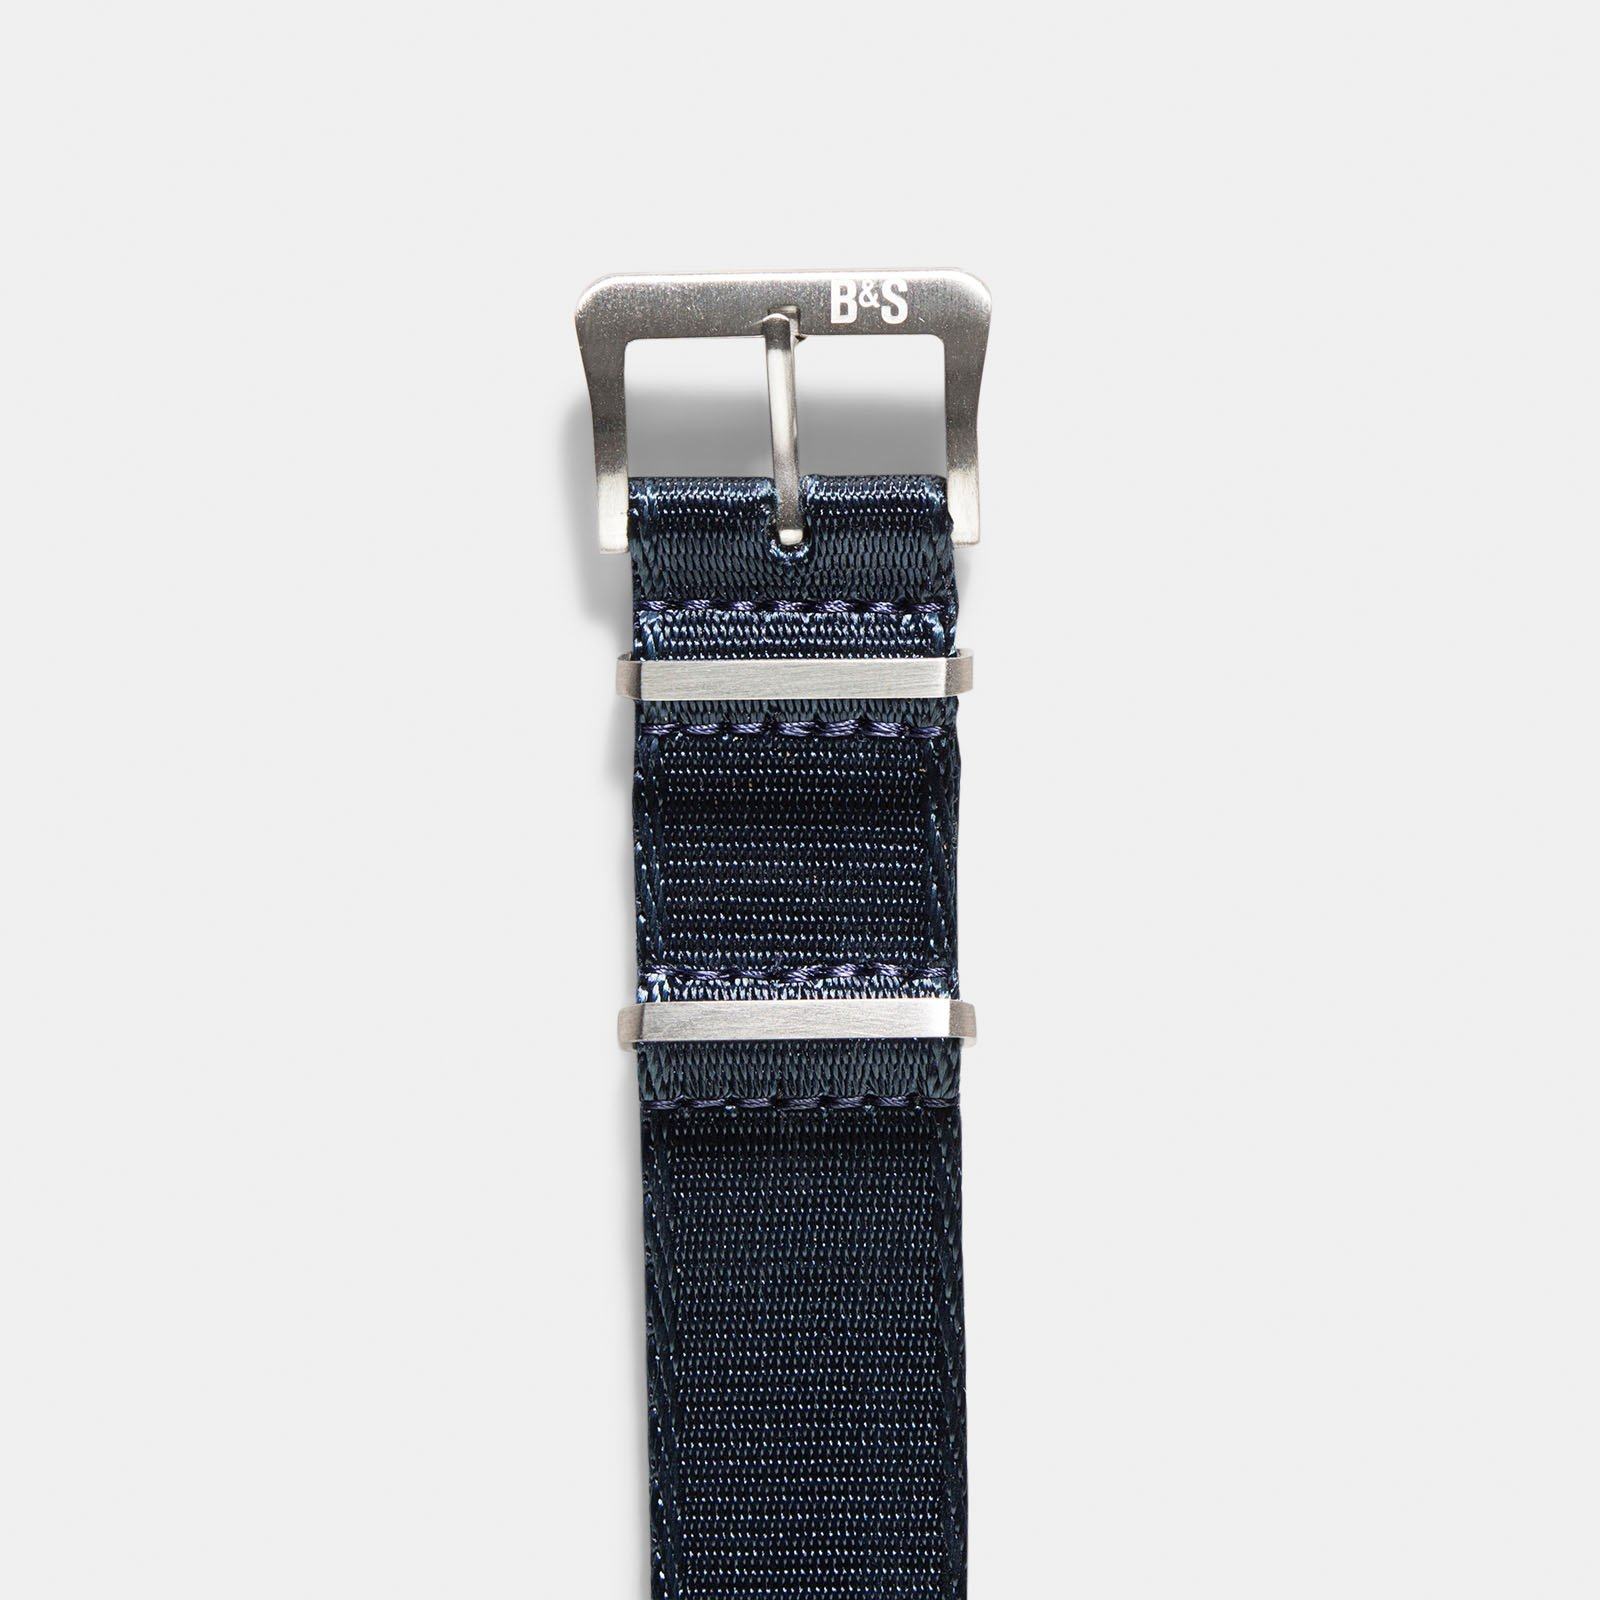 Deluxe Nylon Nato Horlogeband Navy Blue